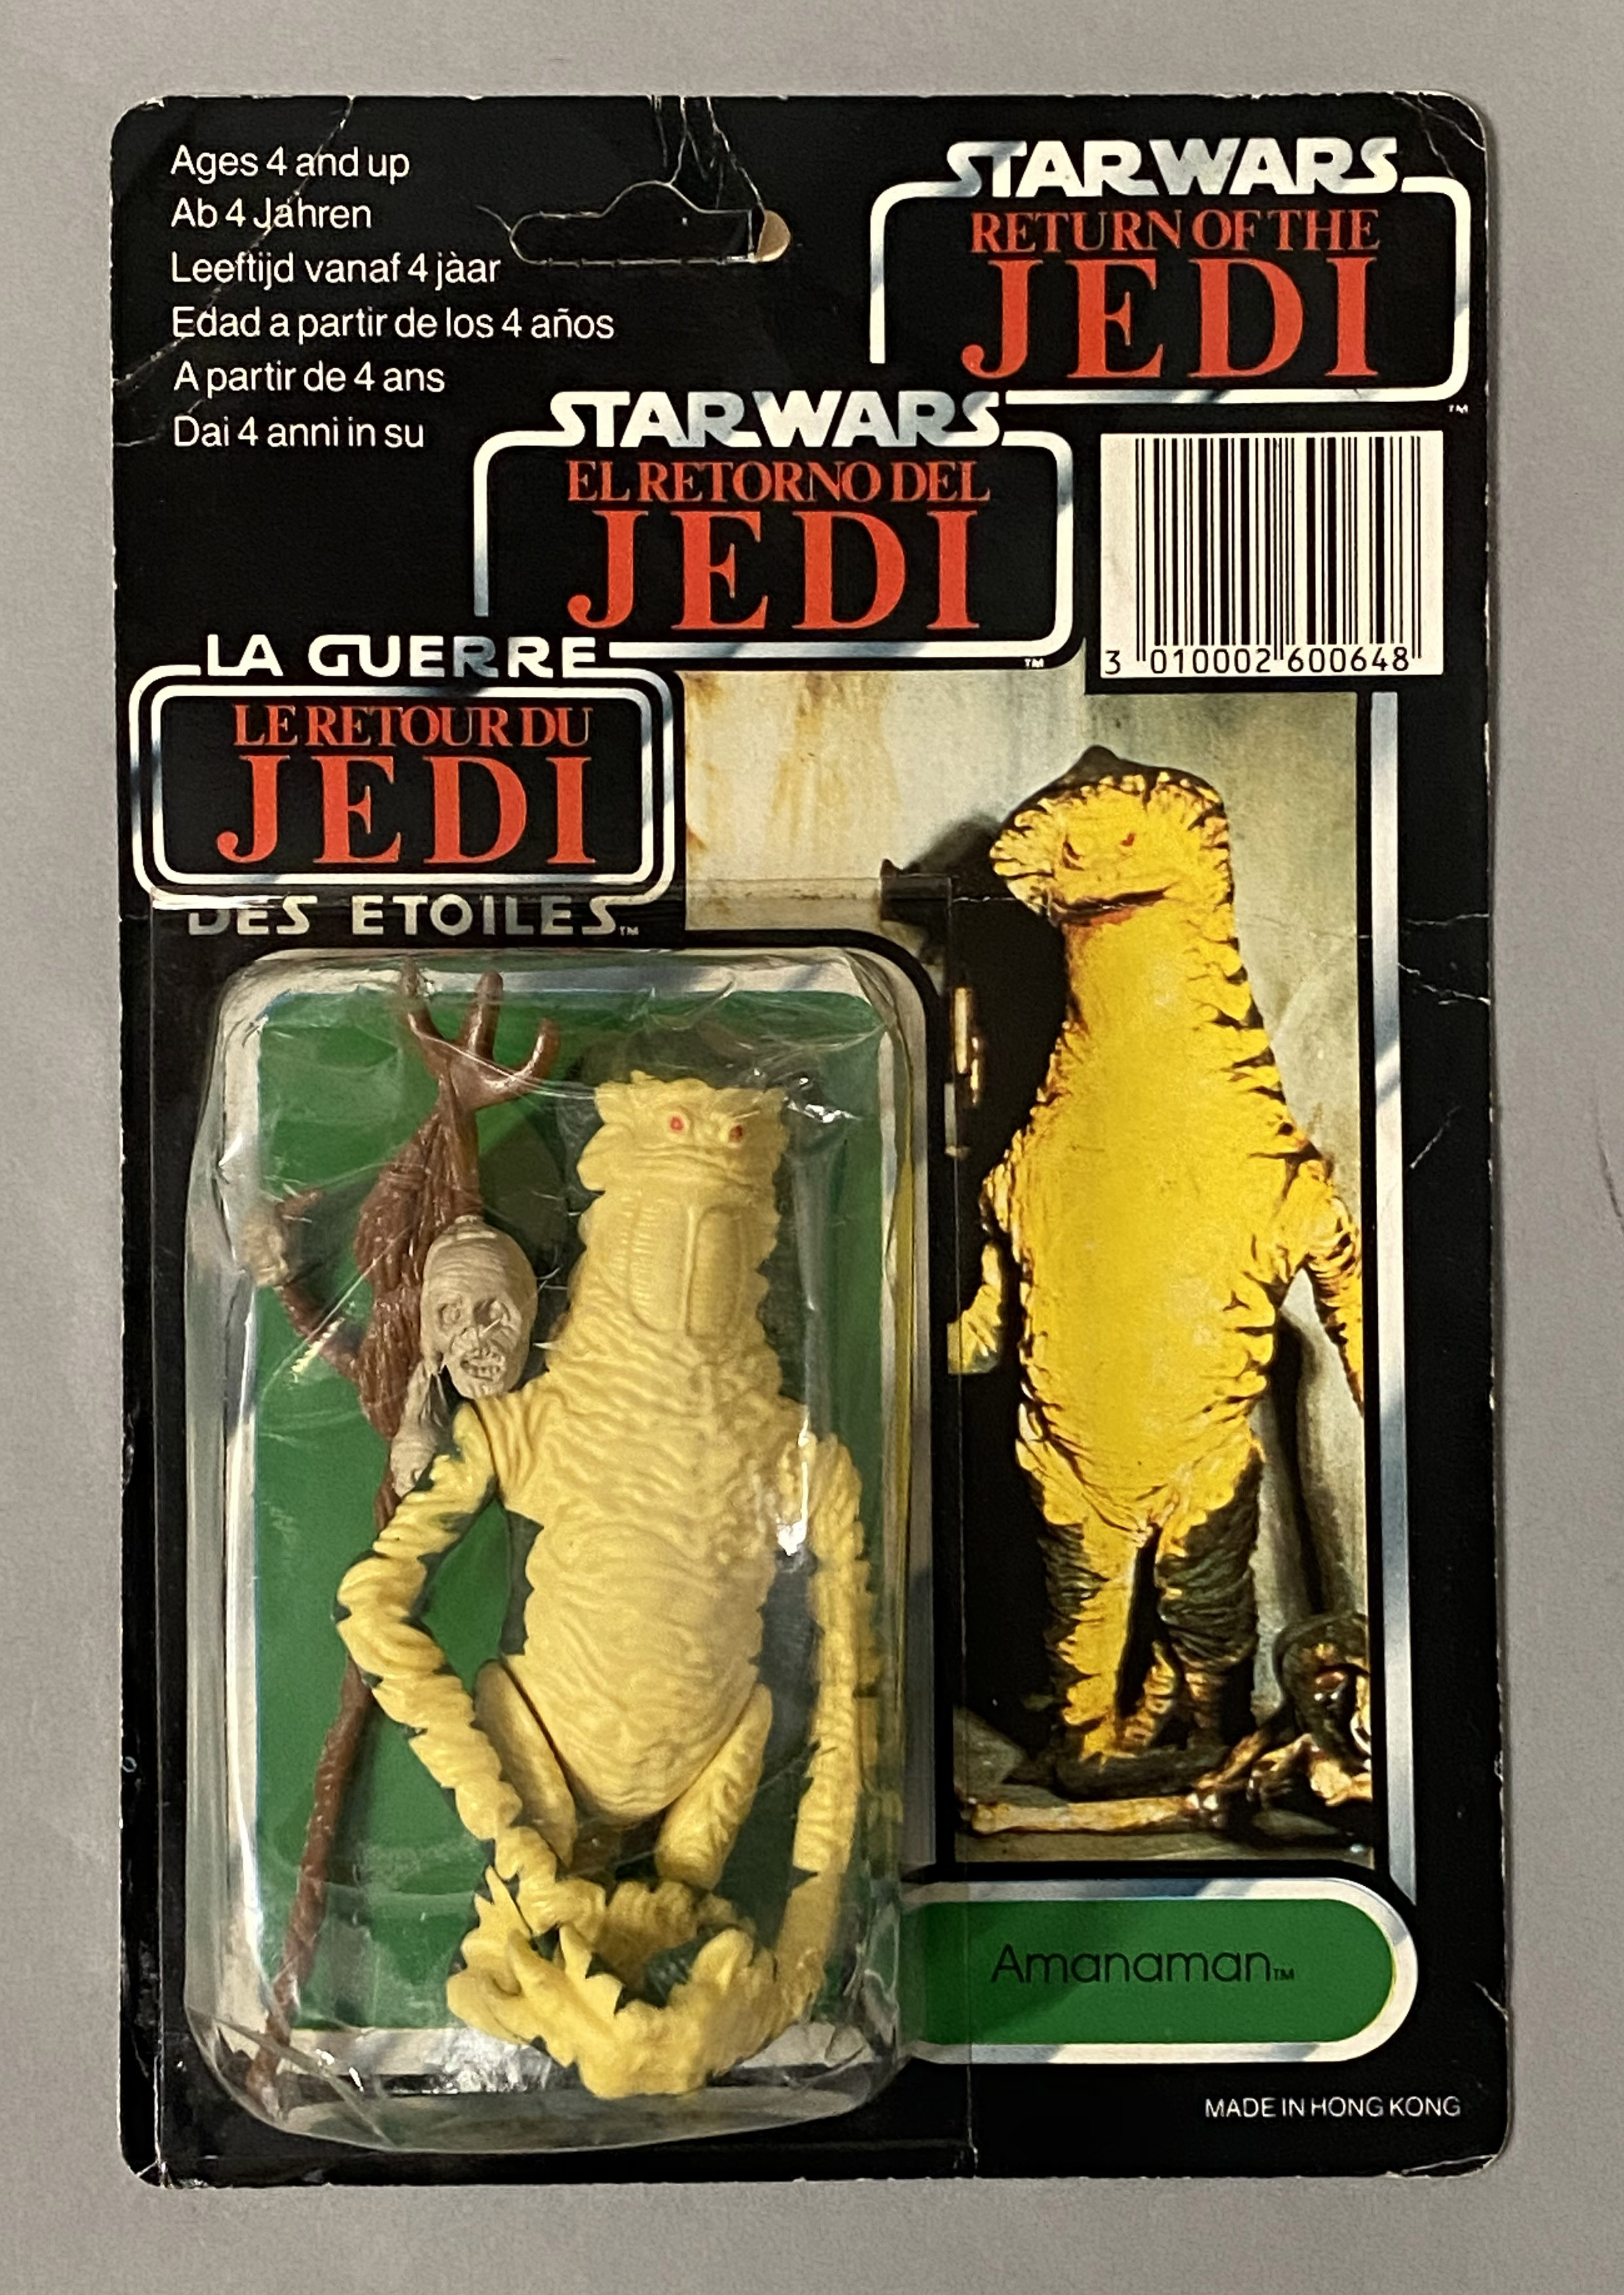 Vintage Star Wars ROTJ Return Of The Jedi Tri-Logo Amanaman figure on original backing card. With pr